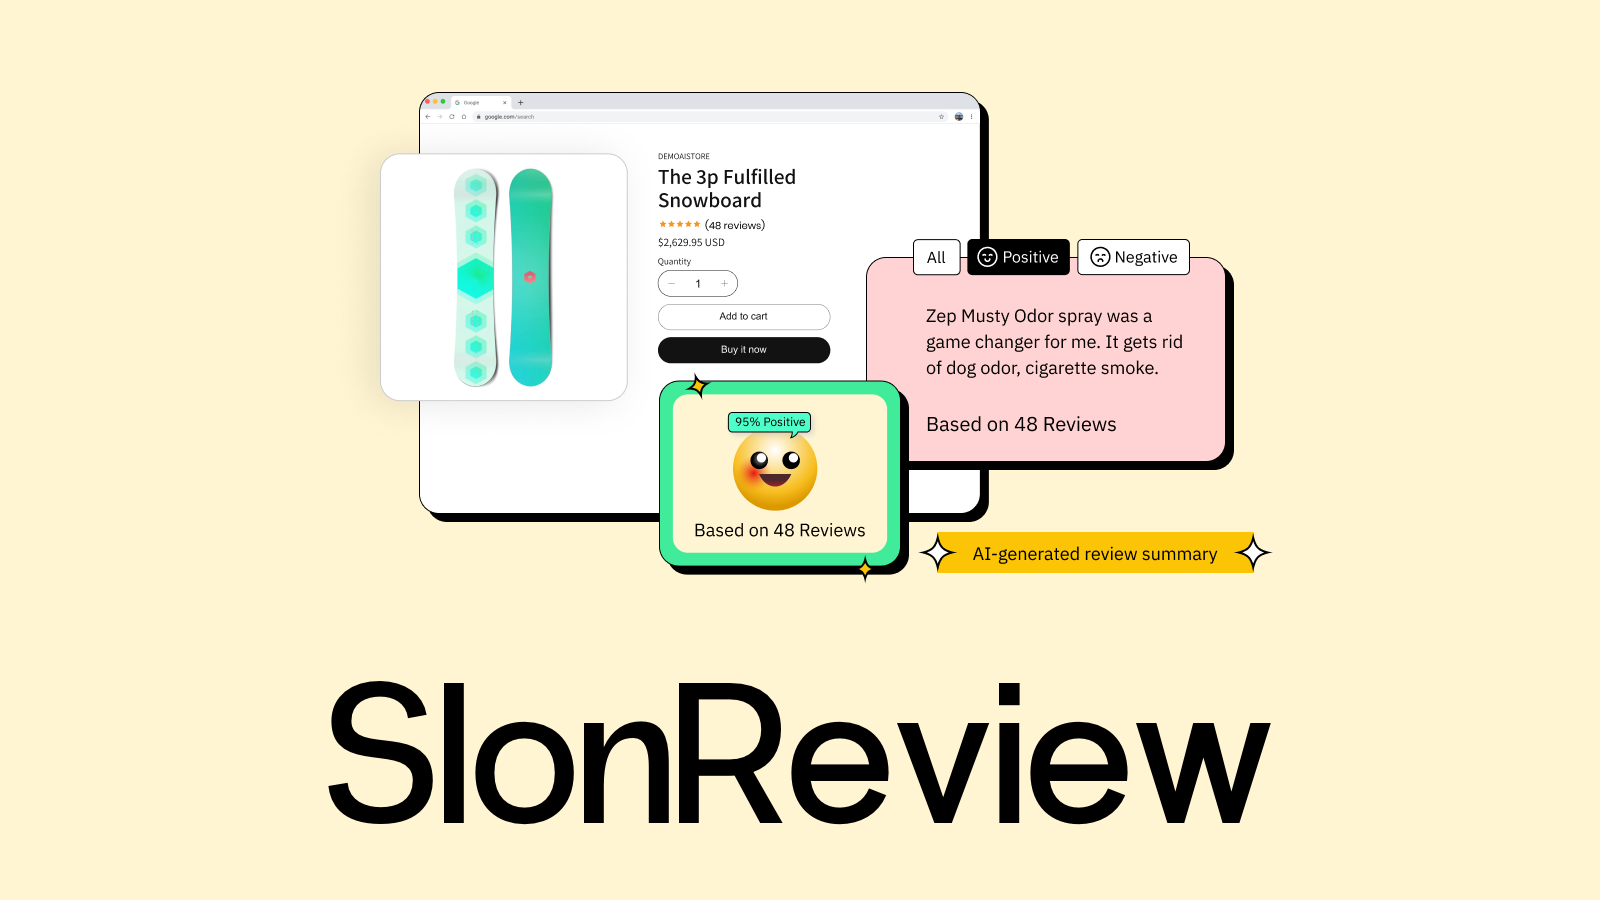 Slon Review Applikationsfunktion